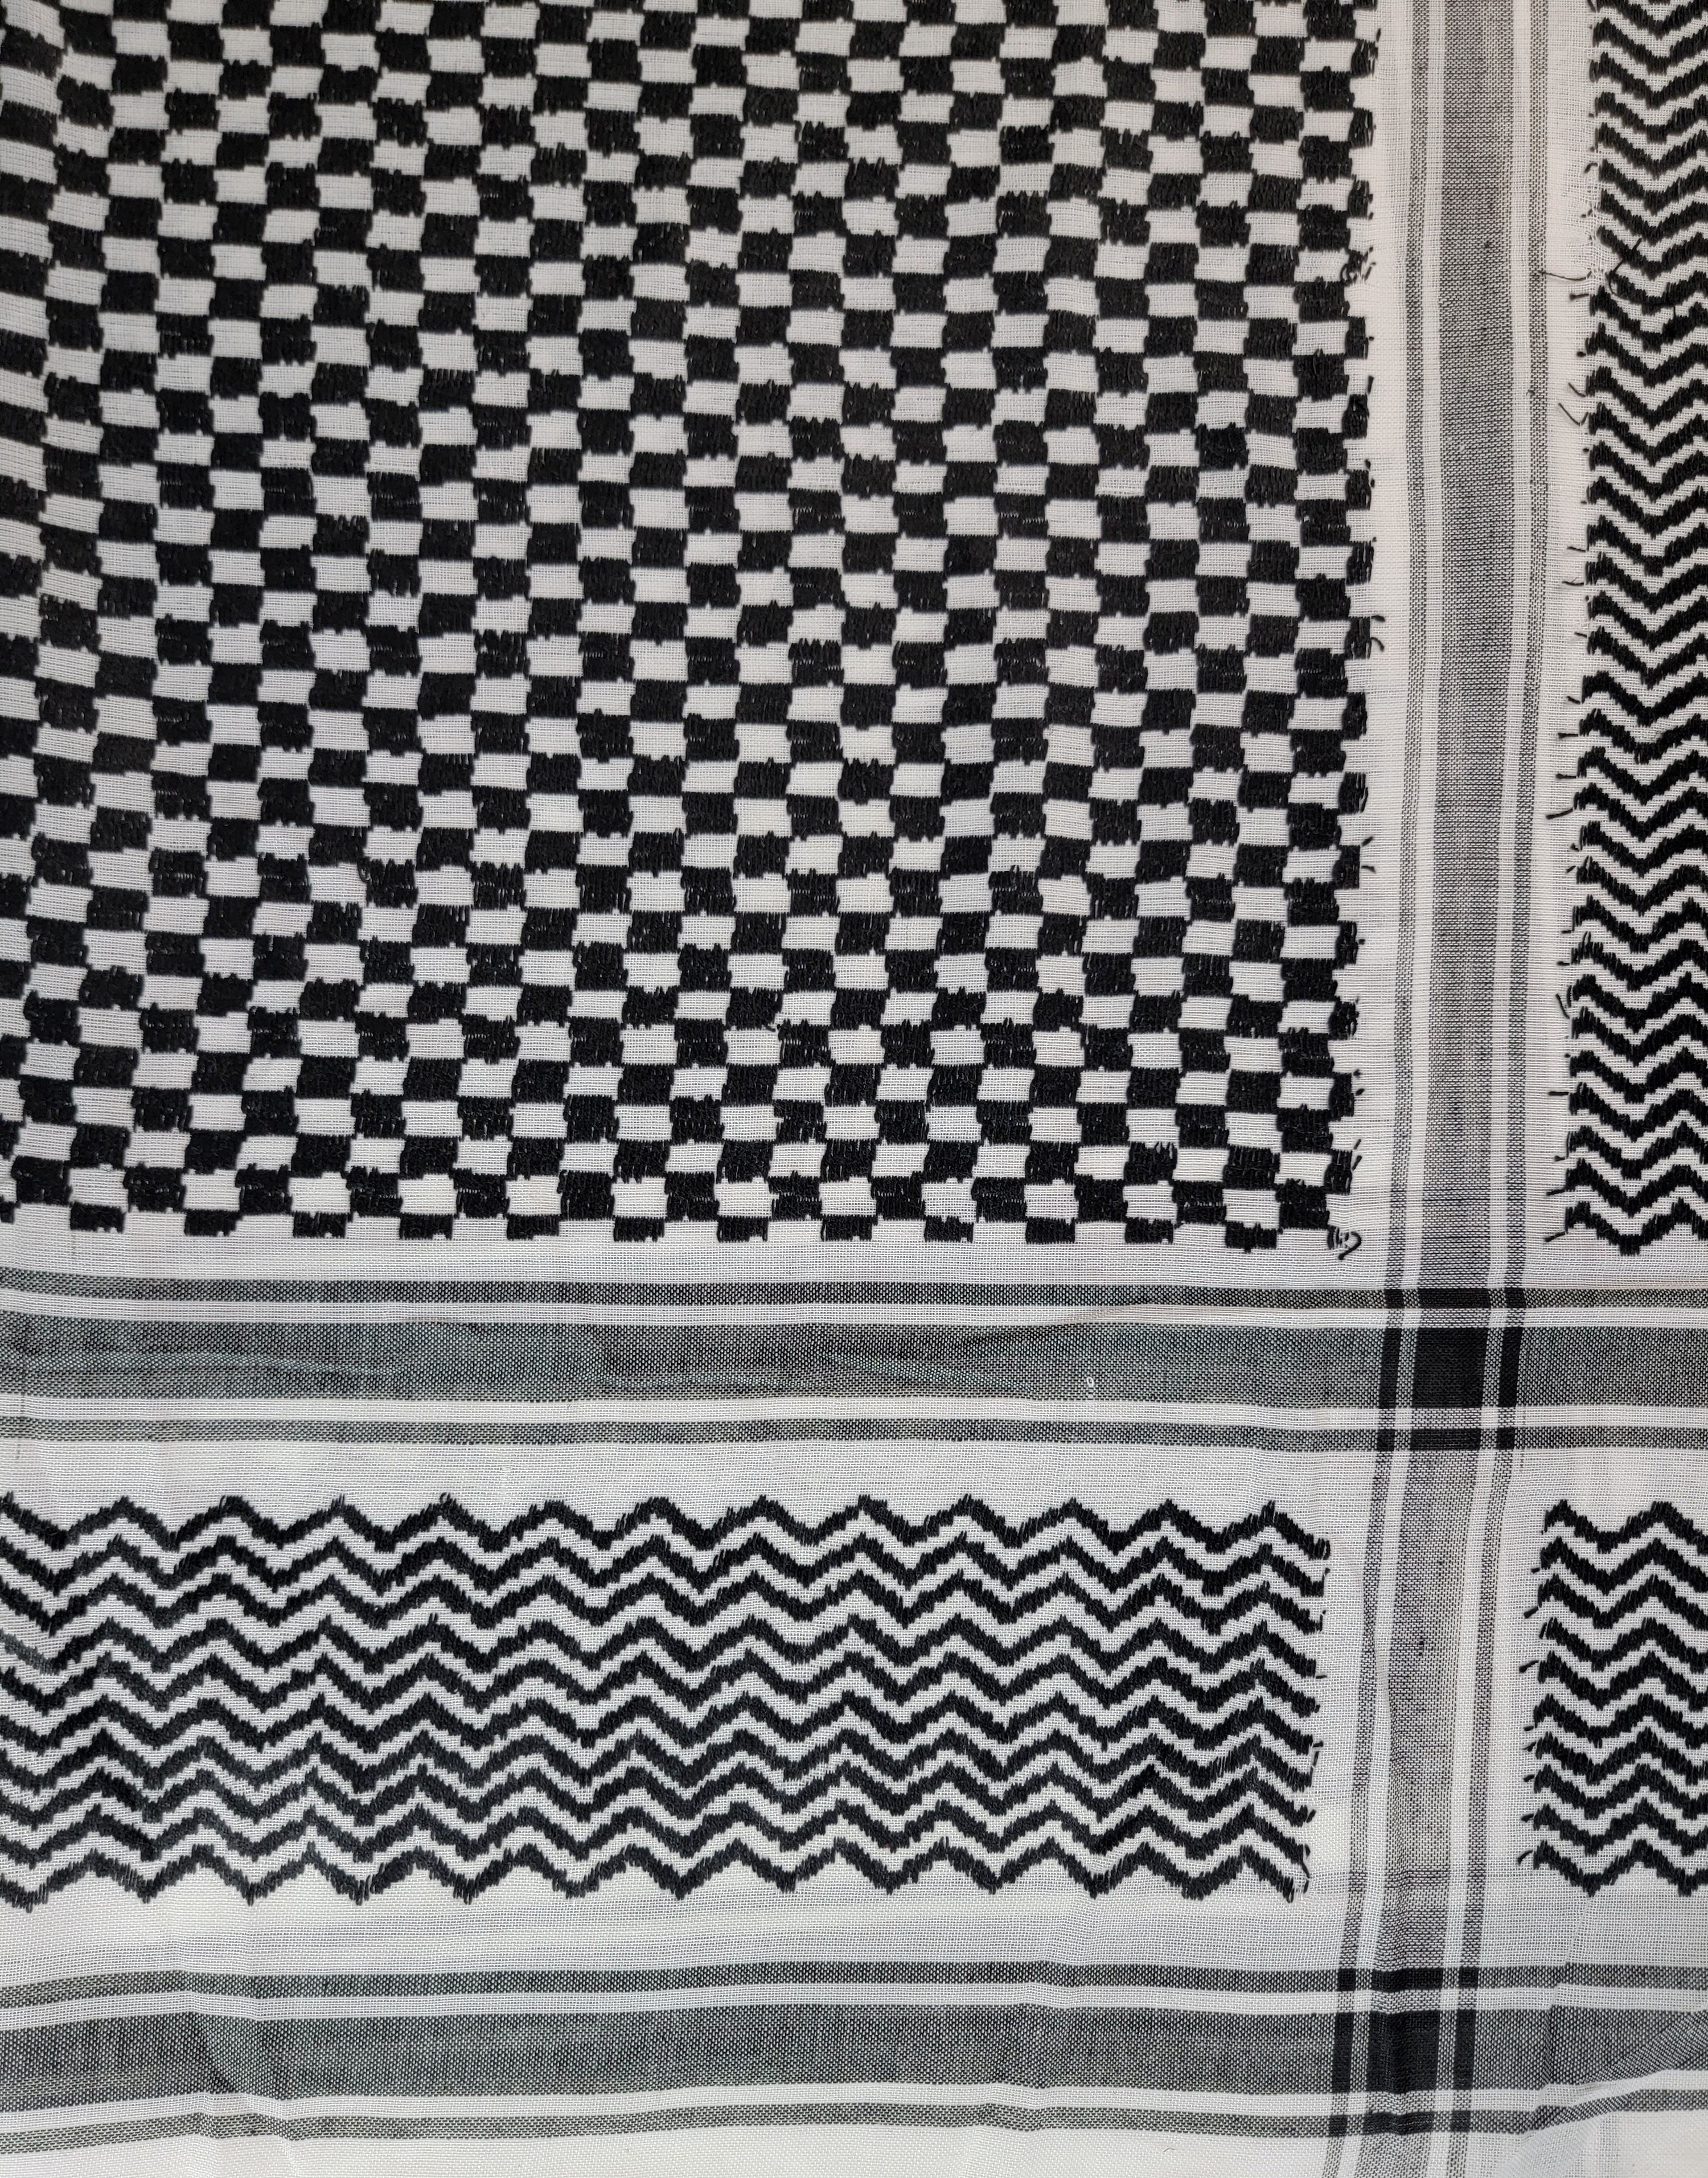 Keffiyeh Scarf Made in Palestine - Shamya - Black and White Color